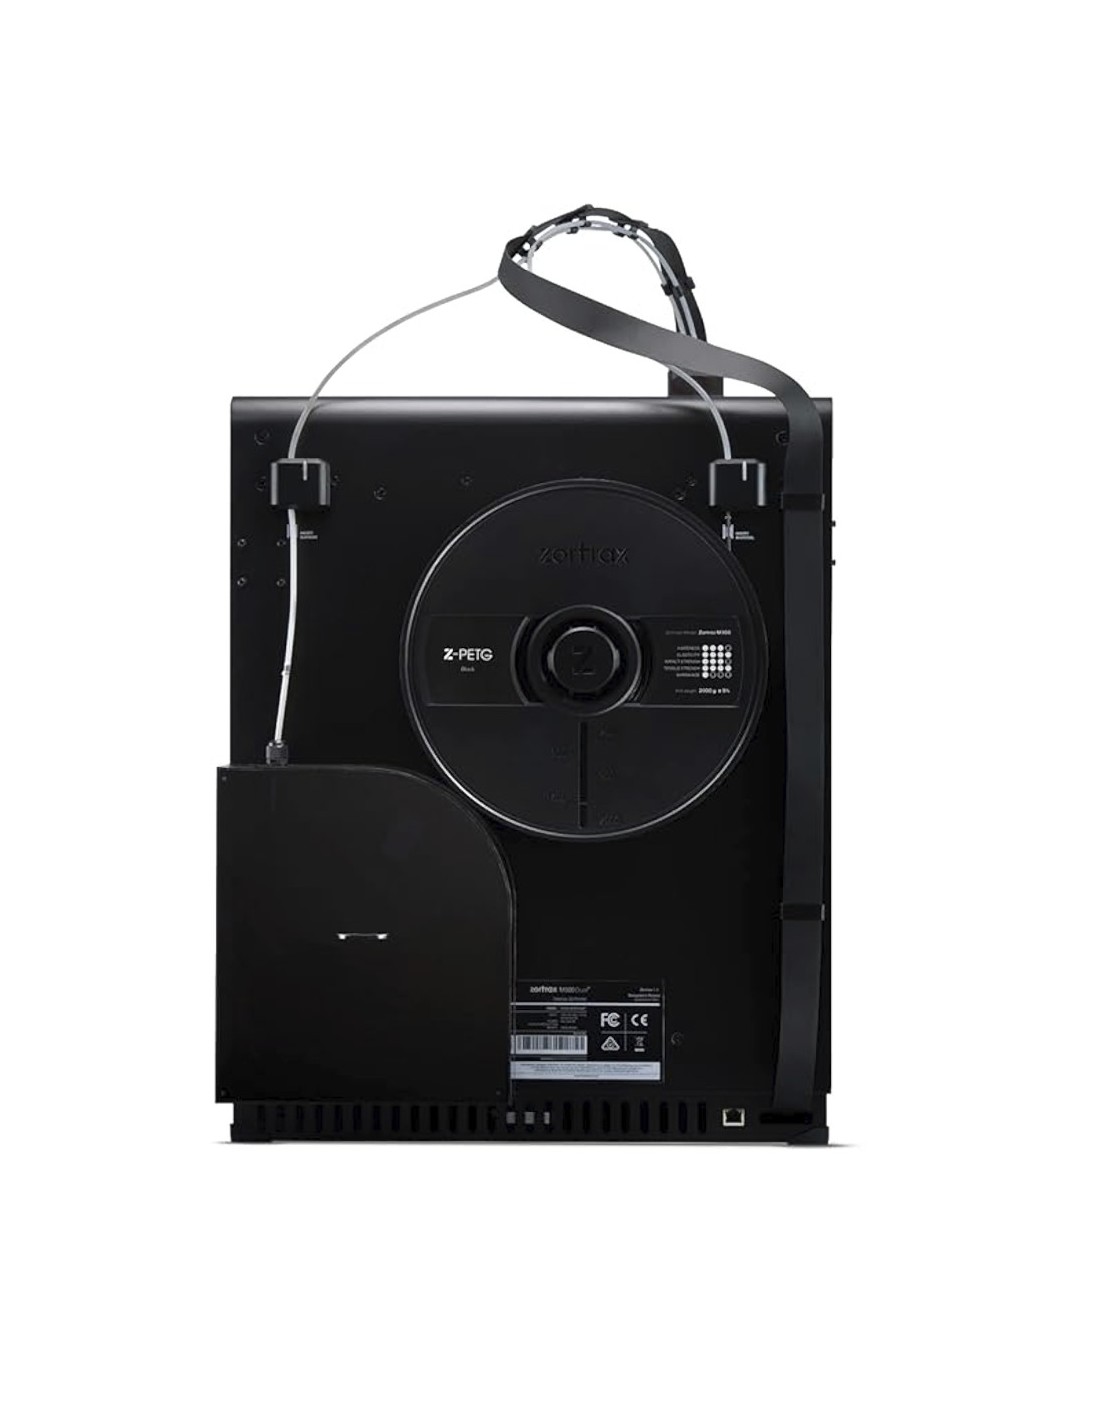 Zortrax M300 Dual - impresora 3D